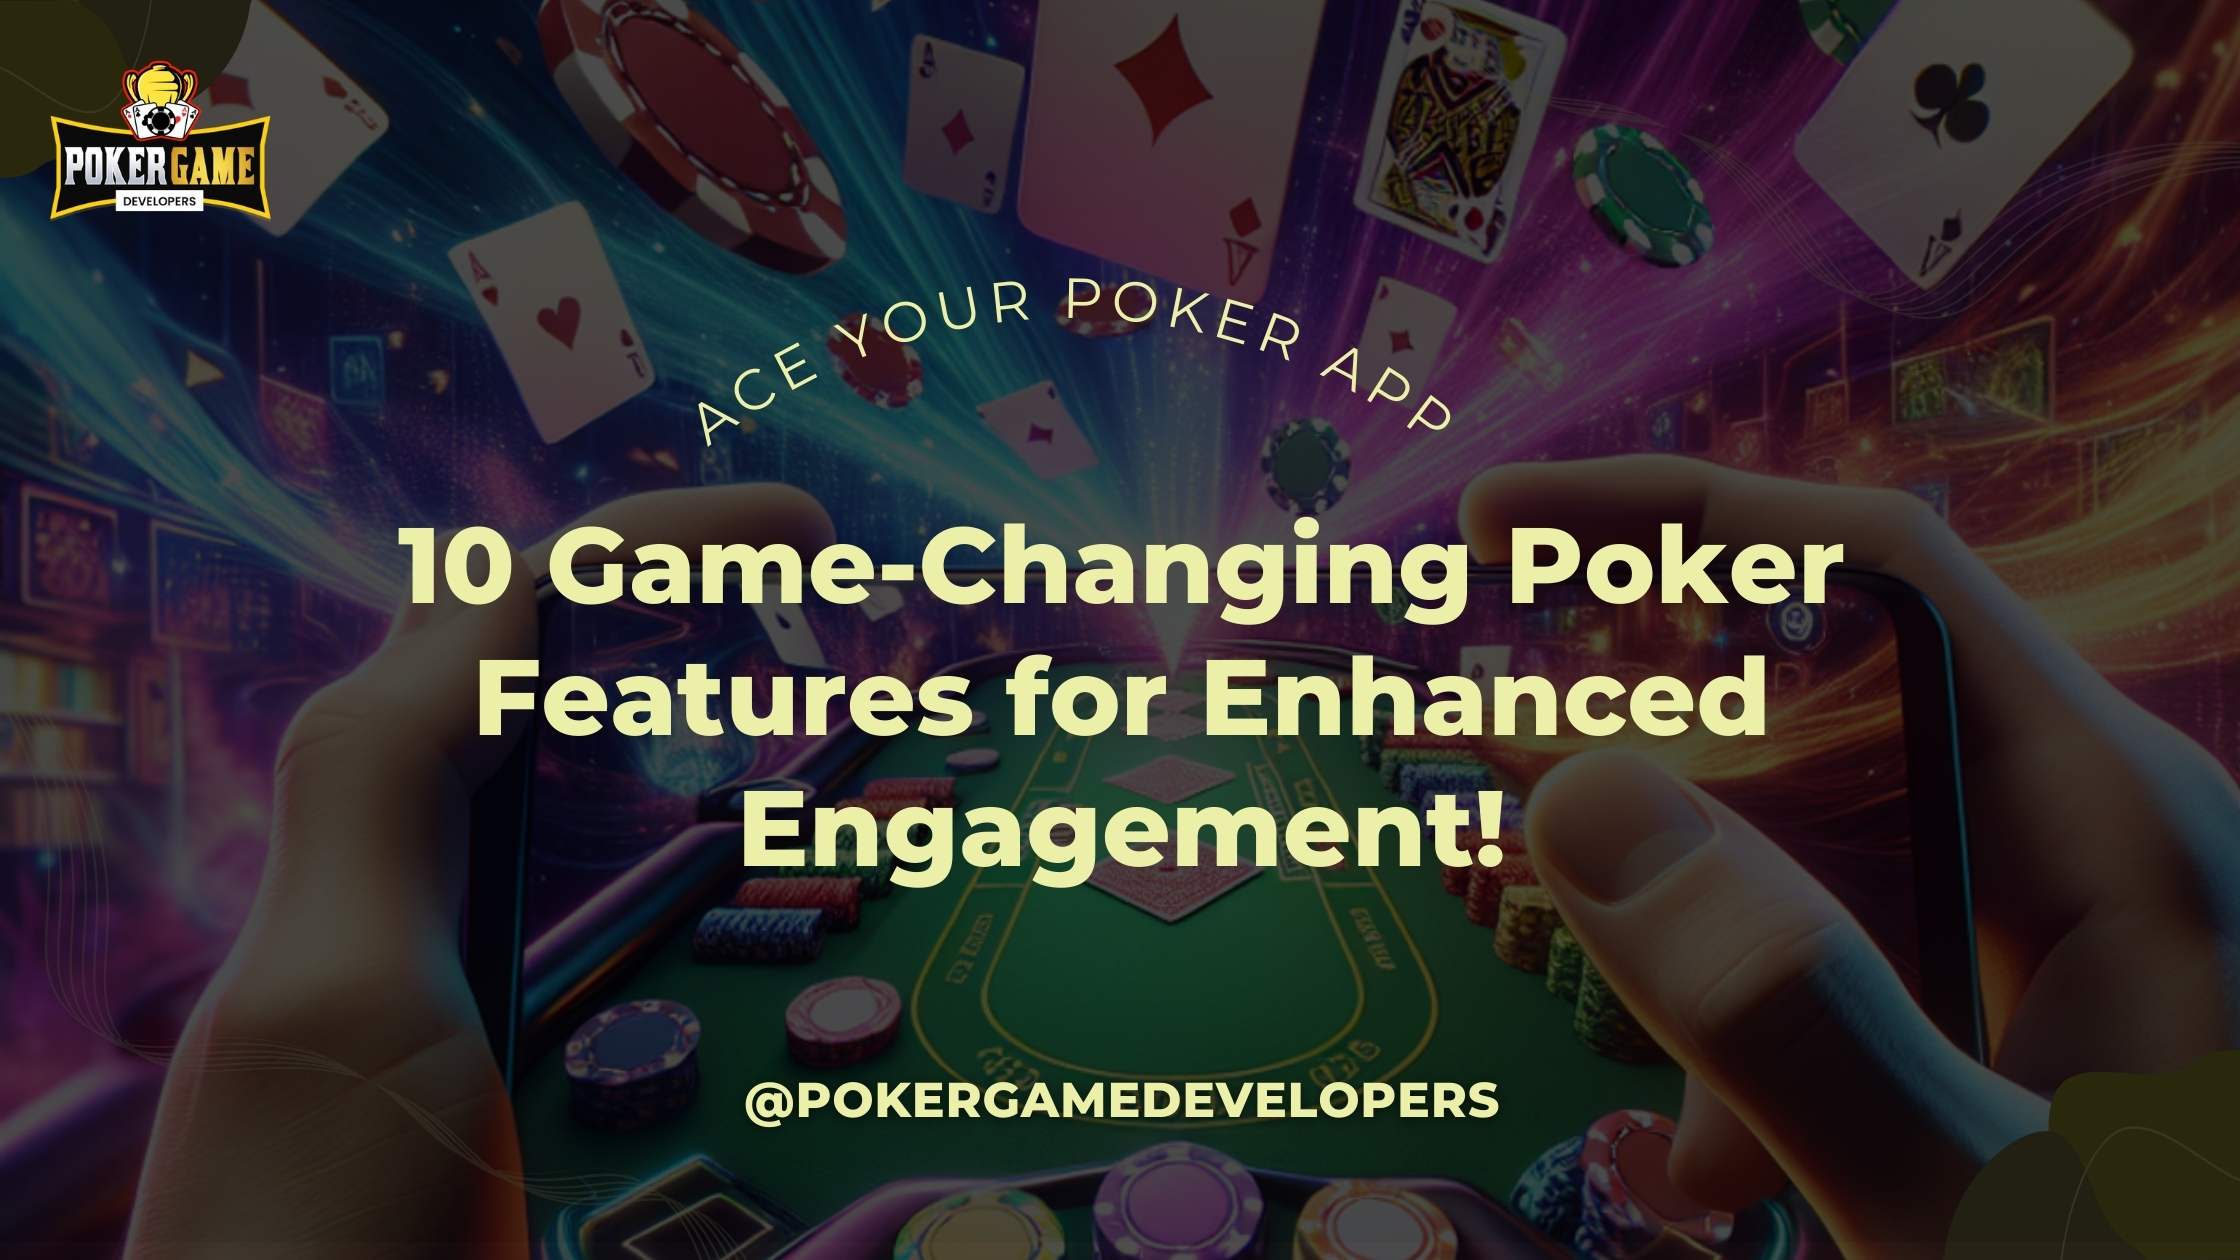 Poker game development features